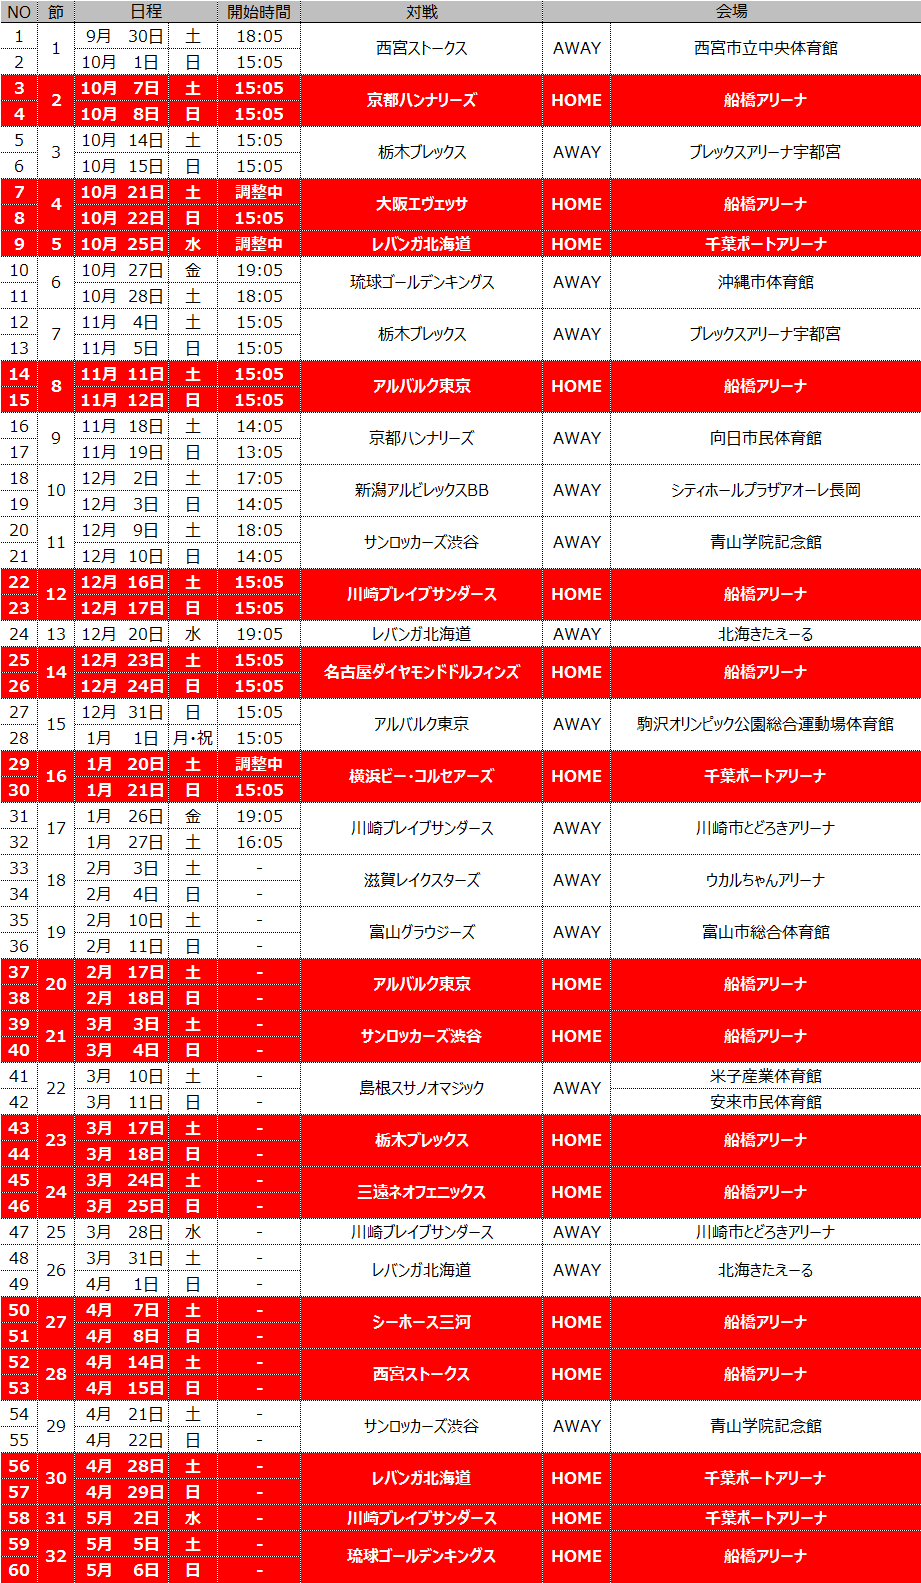 2017-18_schedule_20170707.png